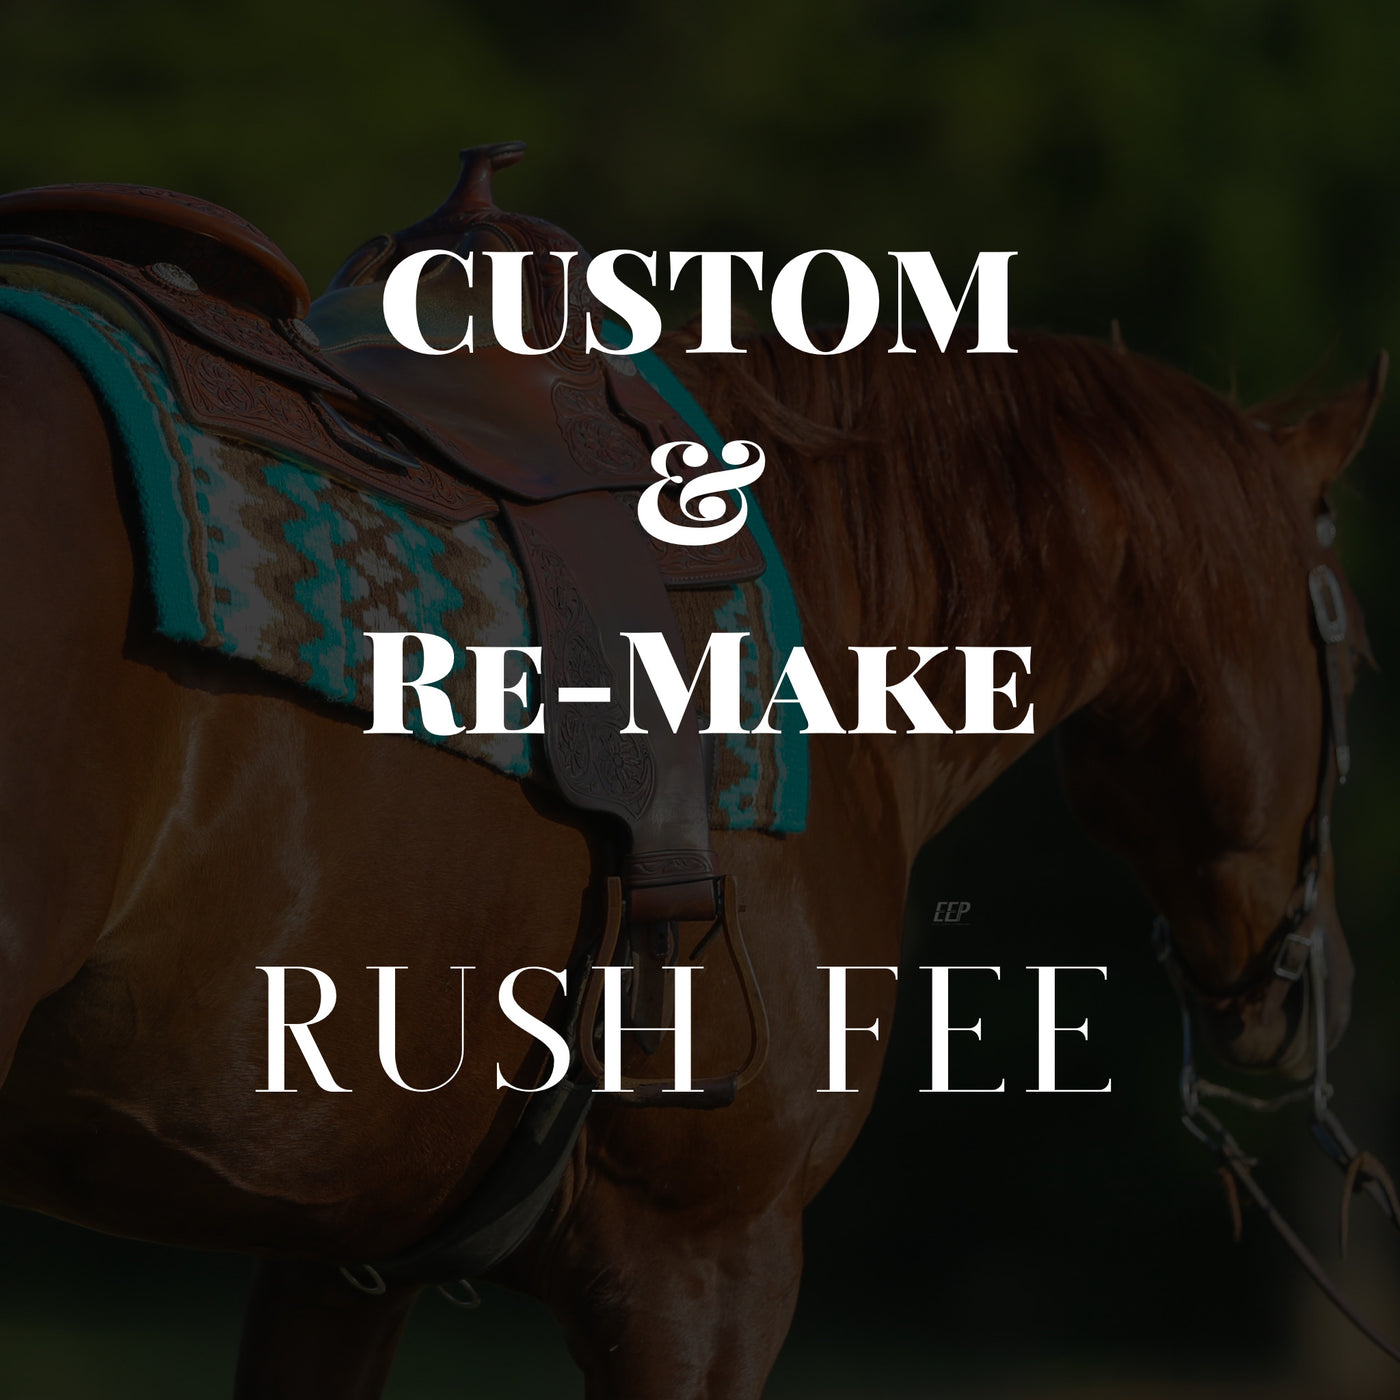 Custom/Re-Make Pad Rush Fee